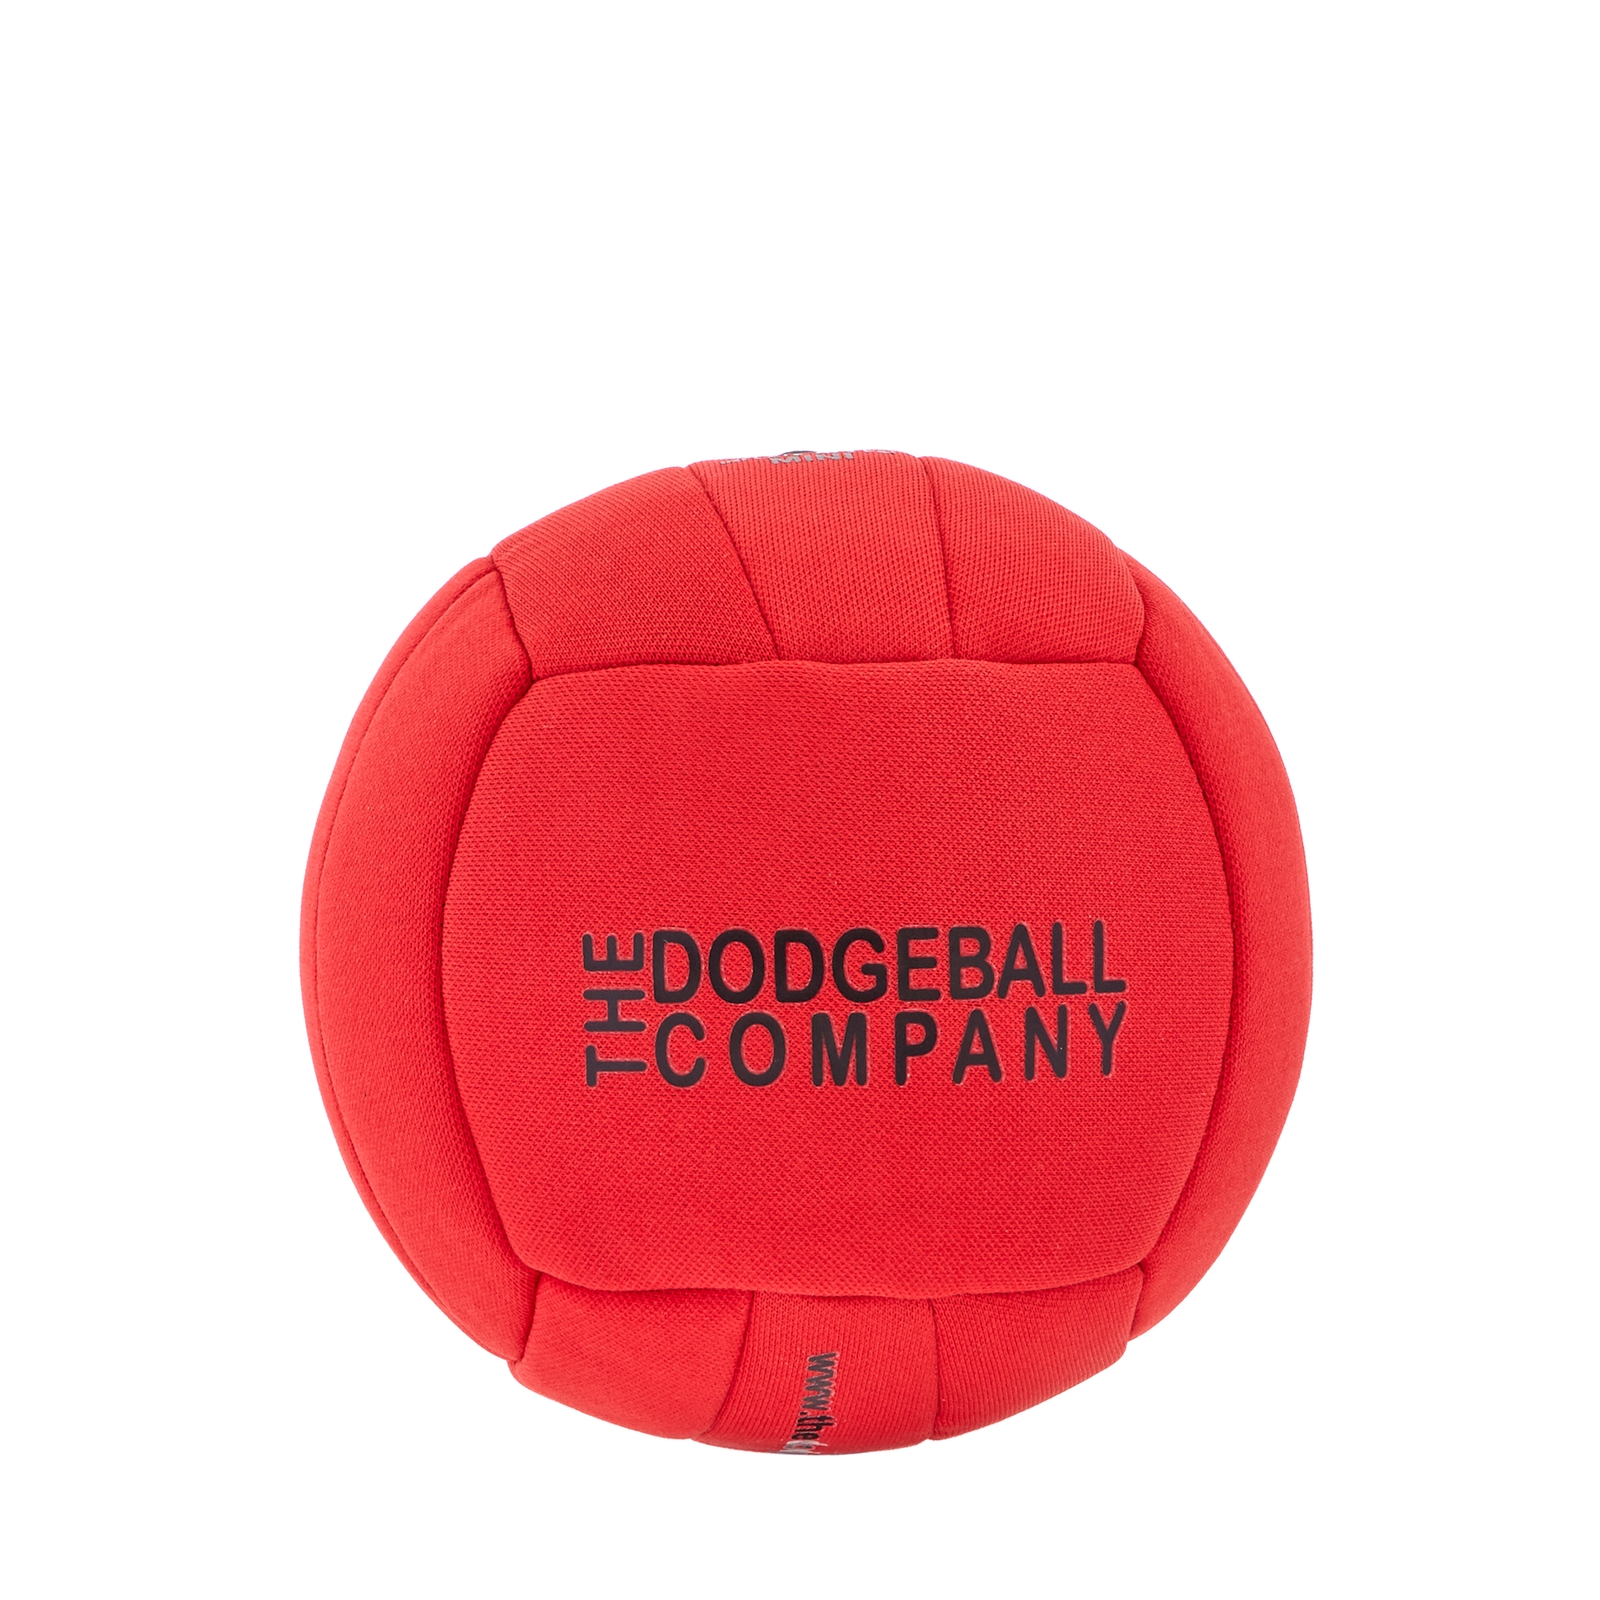 The Dodgeball Company Dodgeball - Size 1